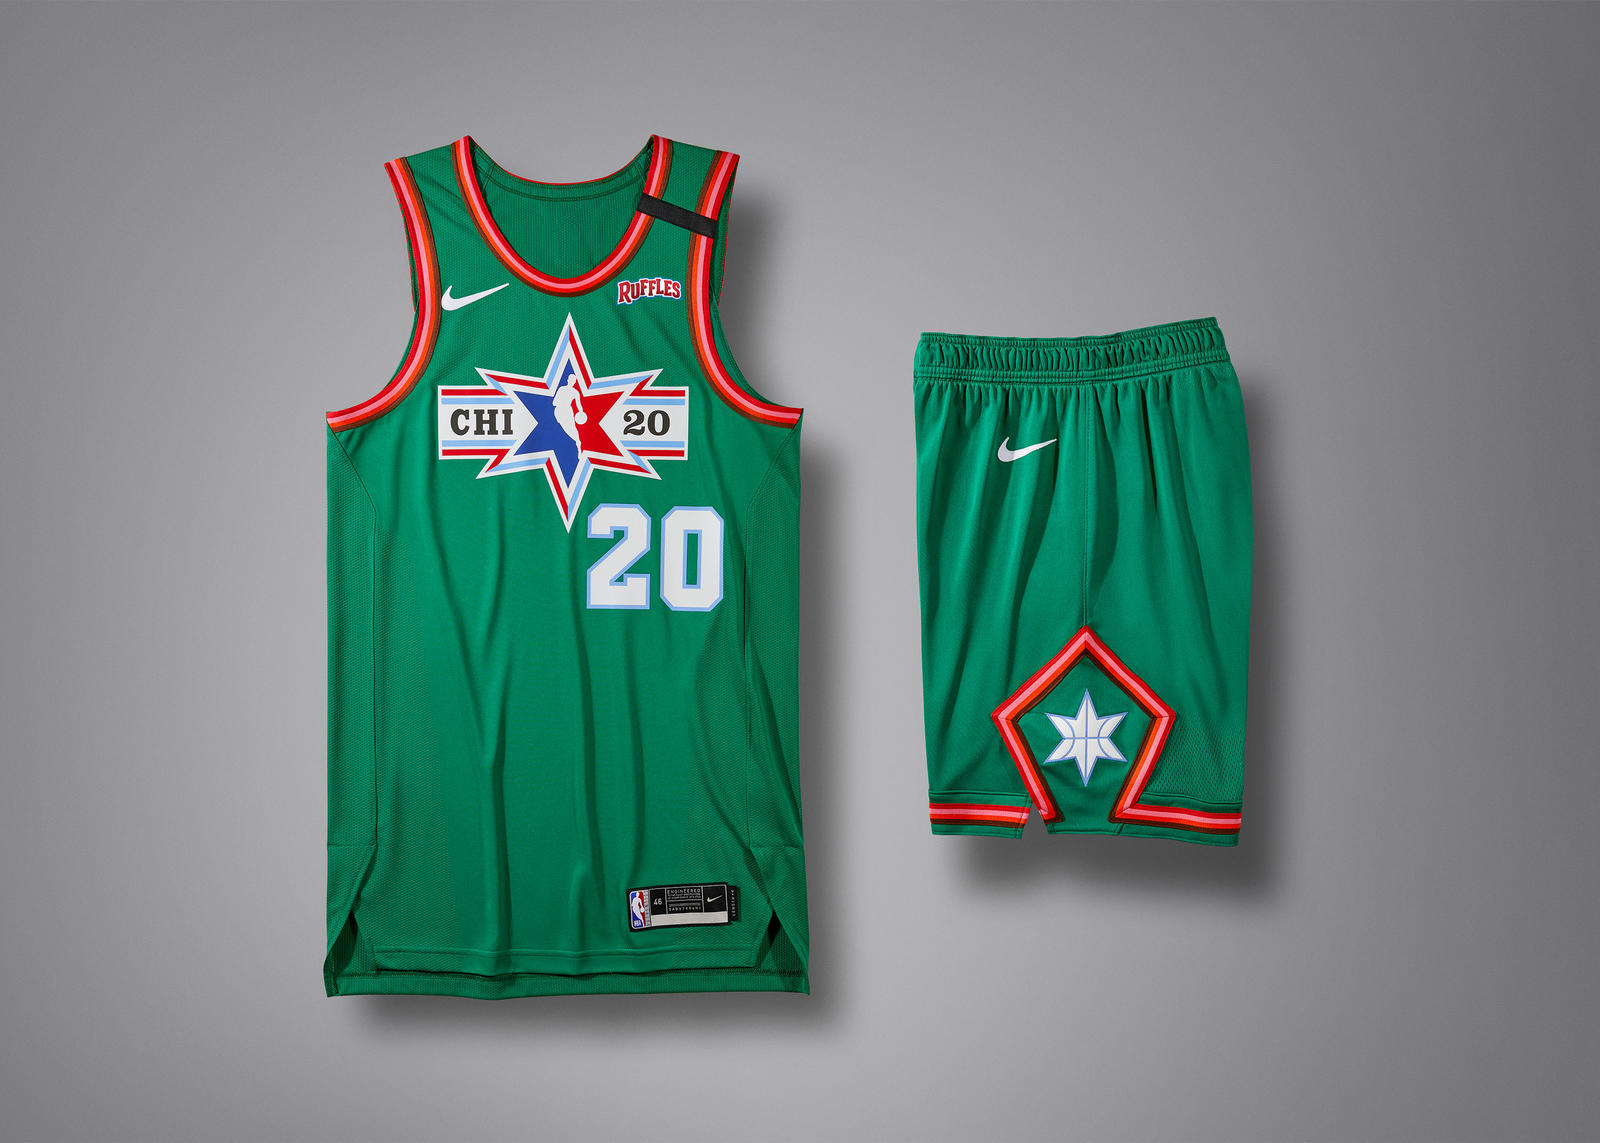 Nike and Jordan Brand Unveil NBA All-Star 2020 Uniforms1600 x 1143